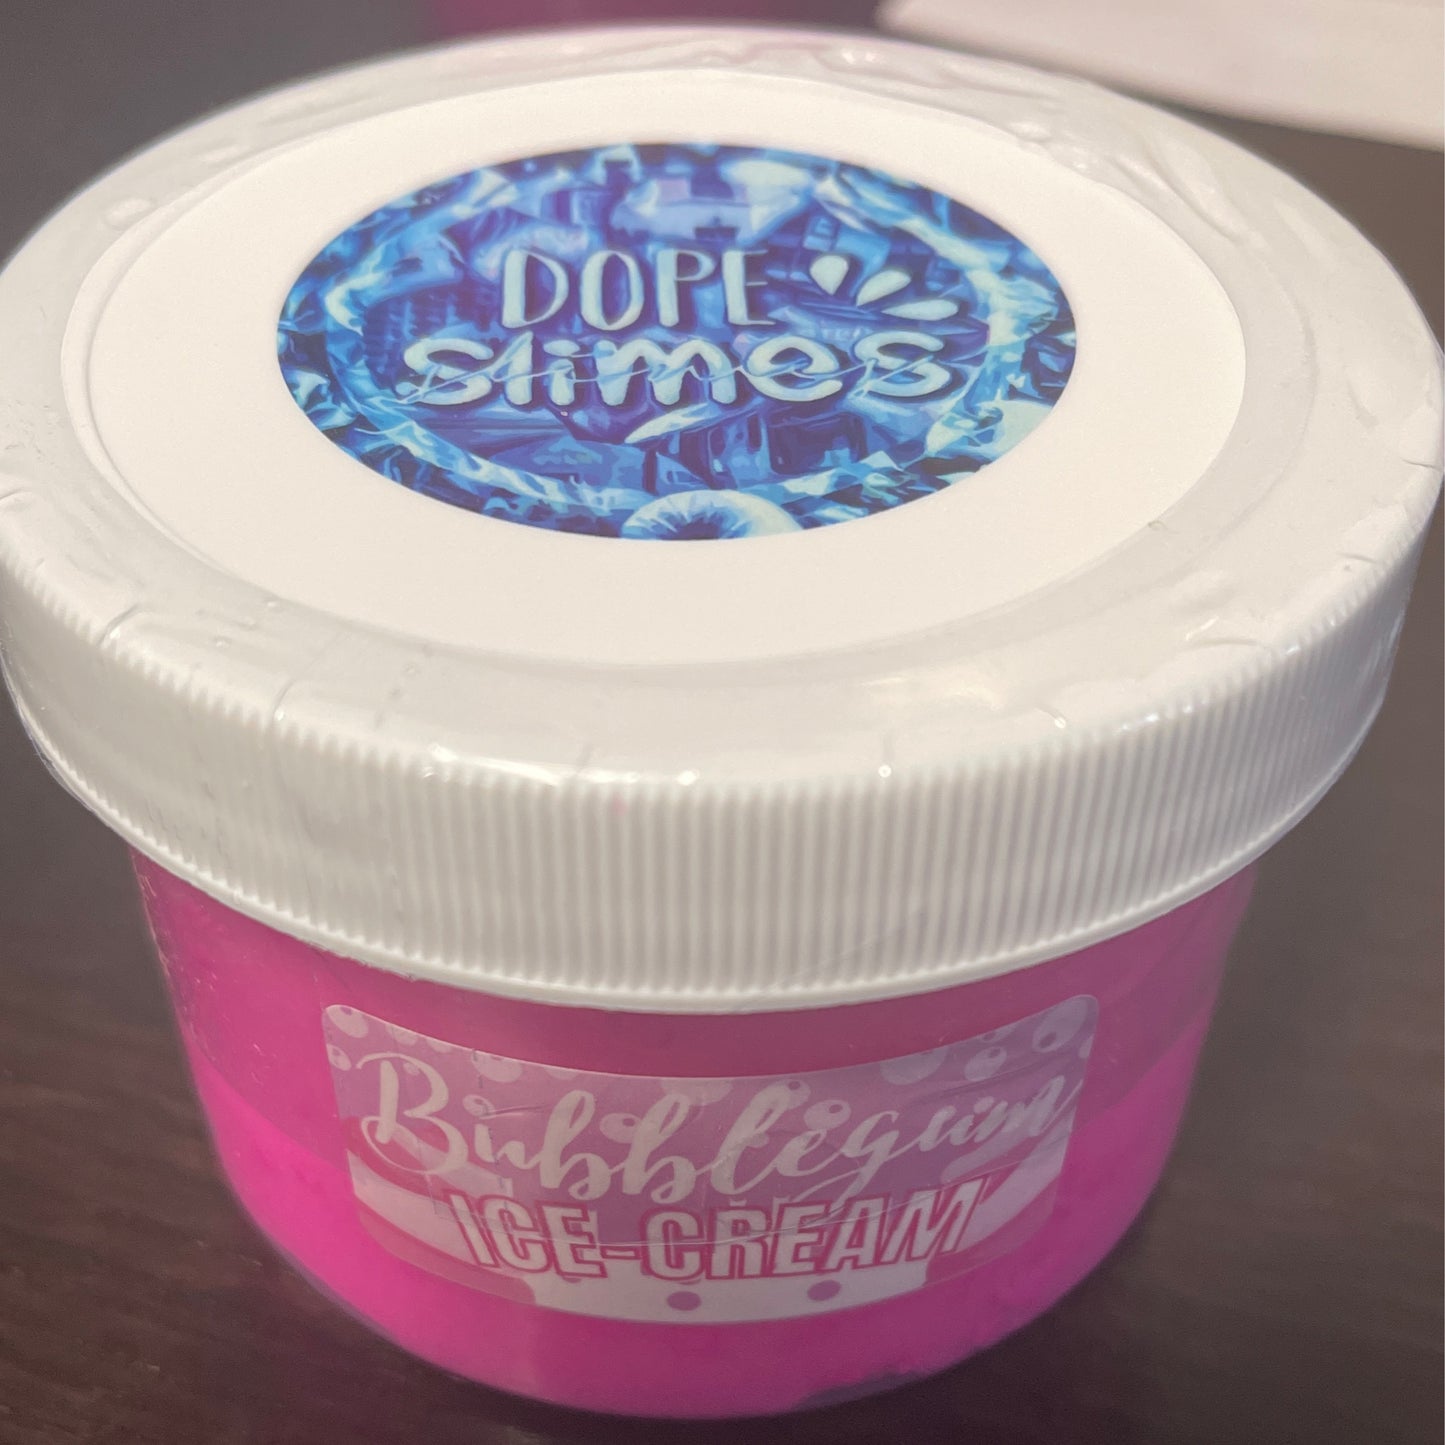 Dope Slimes: Bubblegum Ice Cream